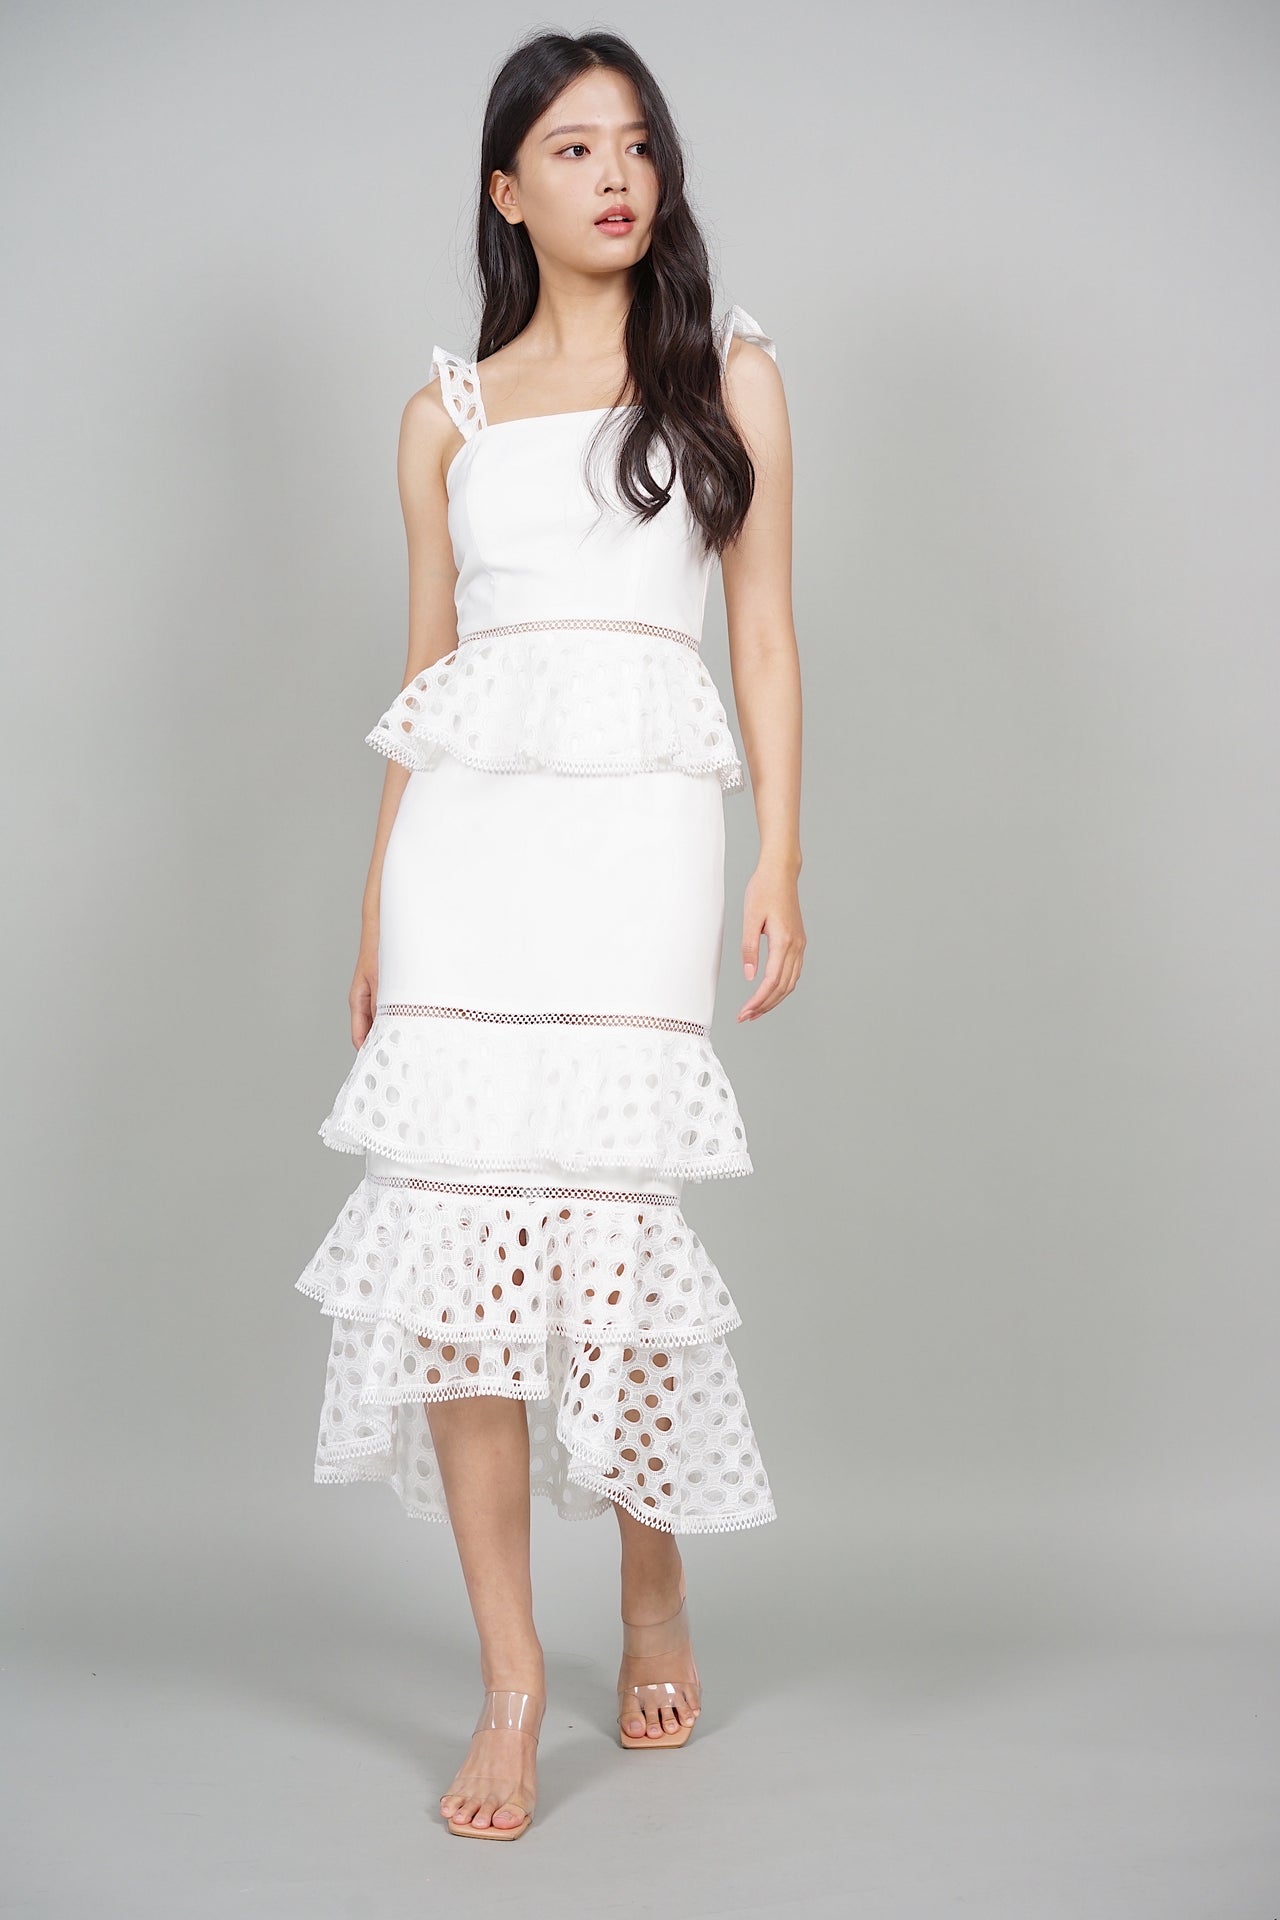 Jovene Tiered Dress in White